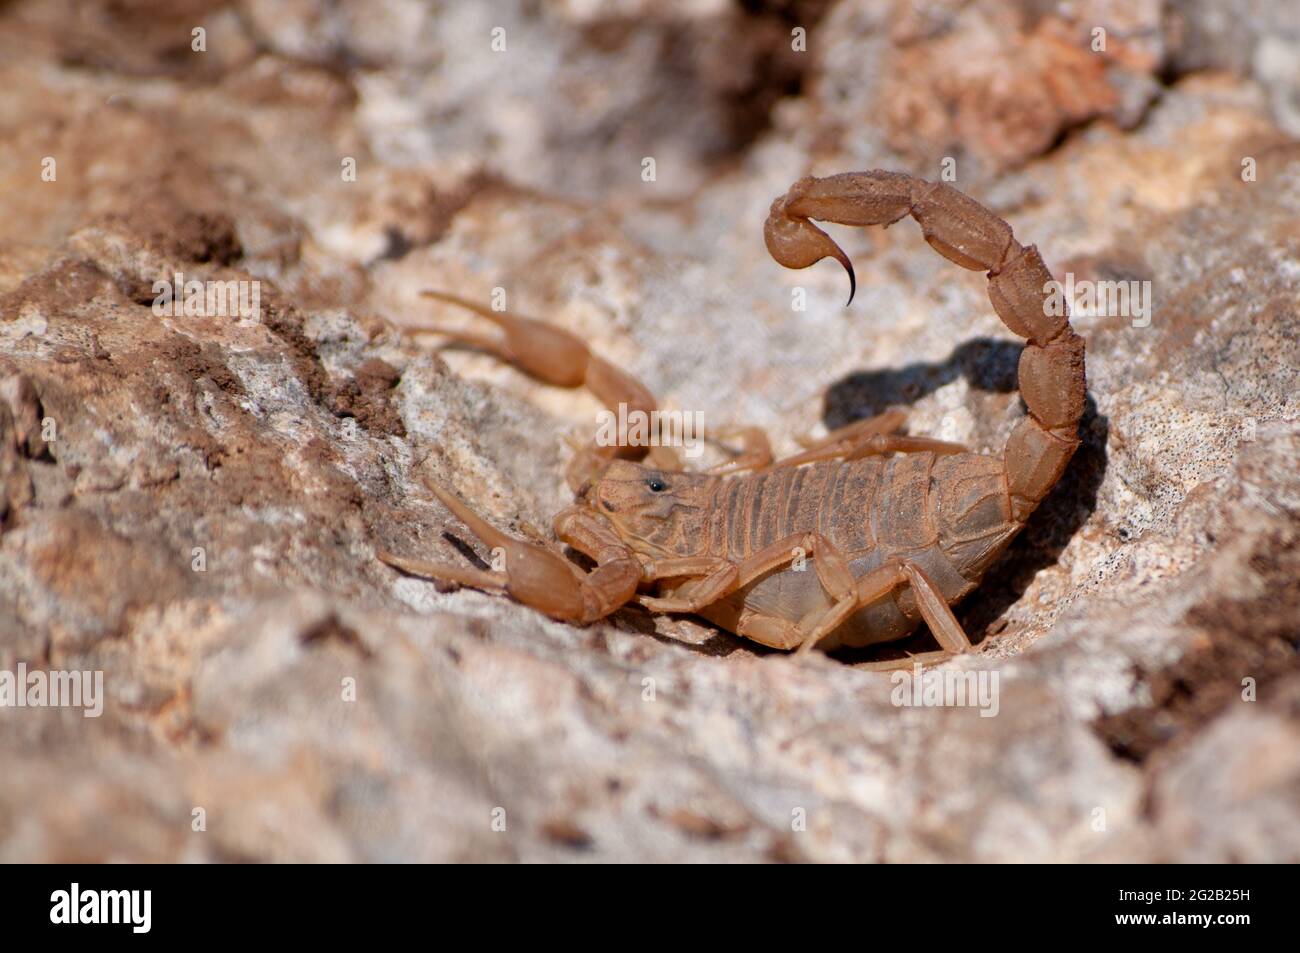 Selective focus shot of a Buthus occitanus (yellow scorpion) Stock Photo